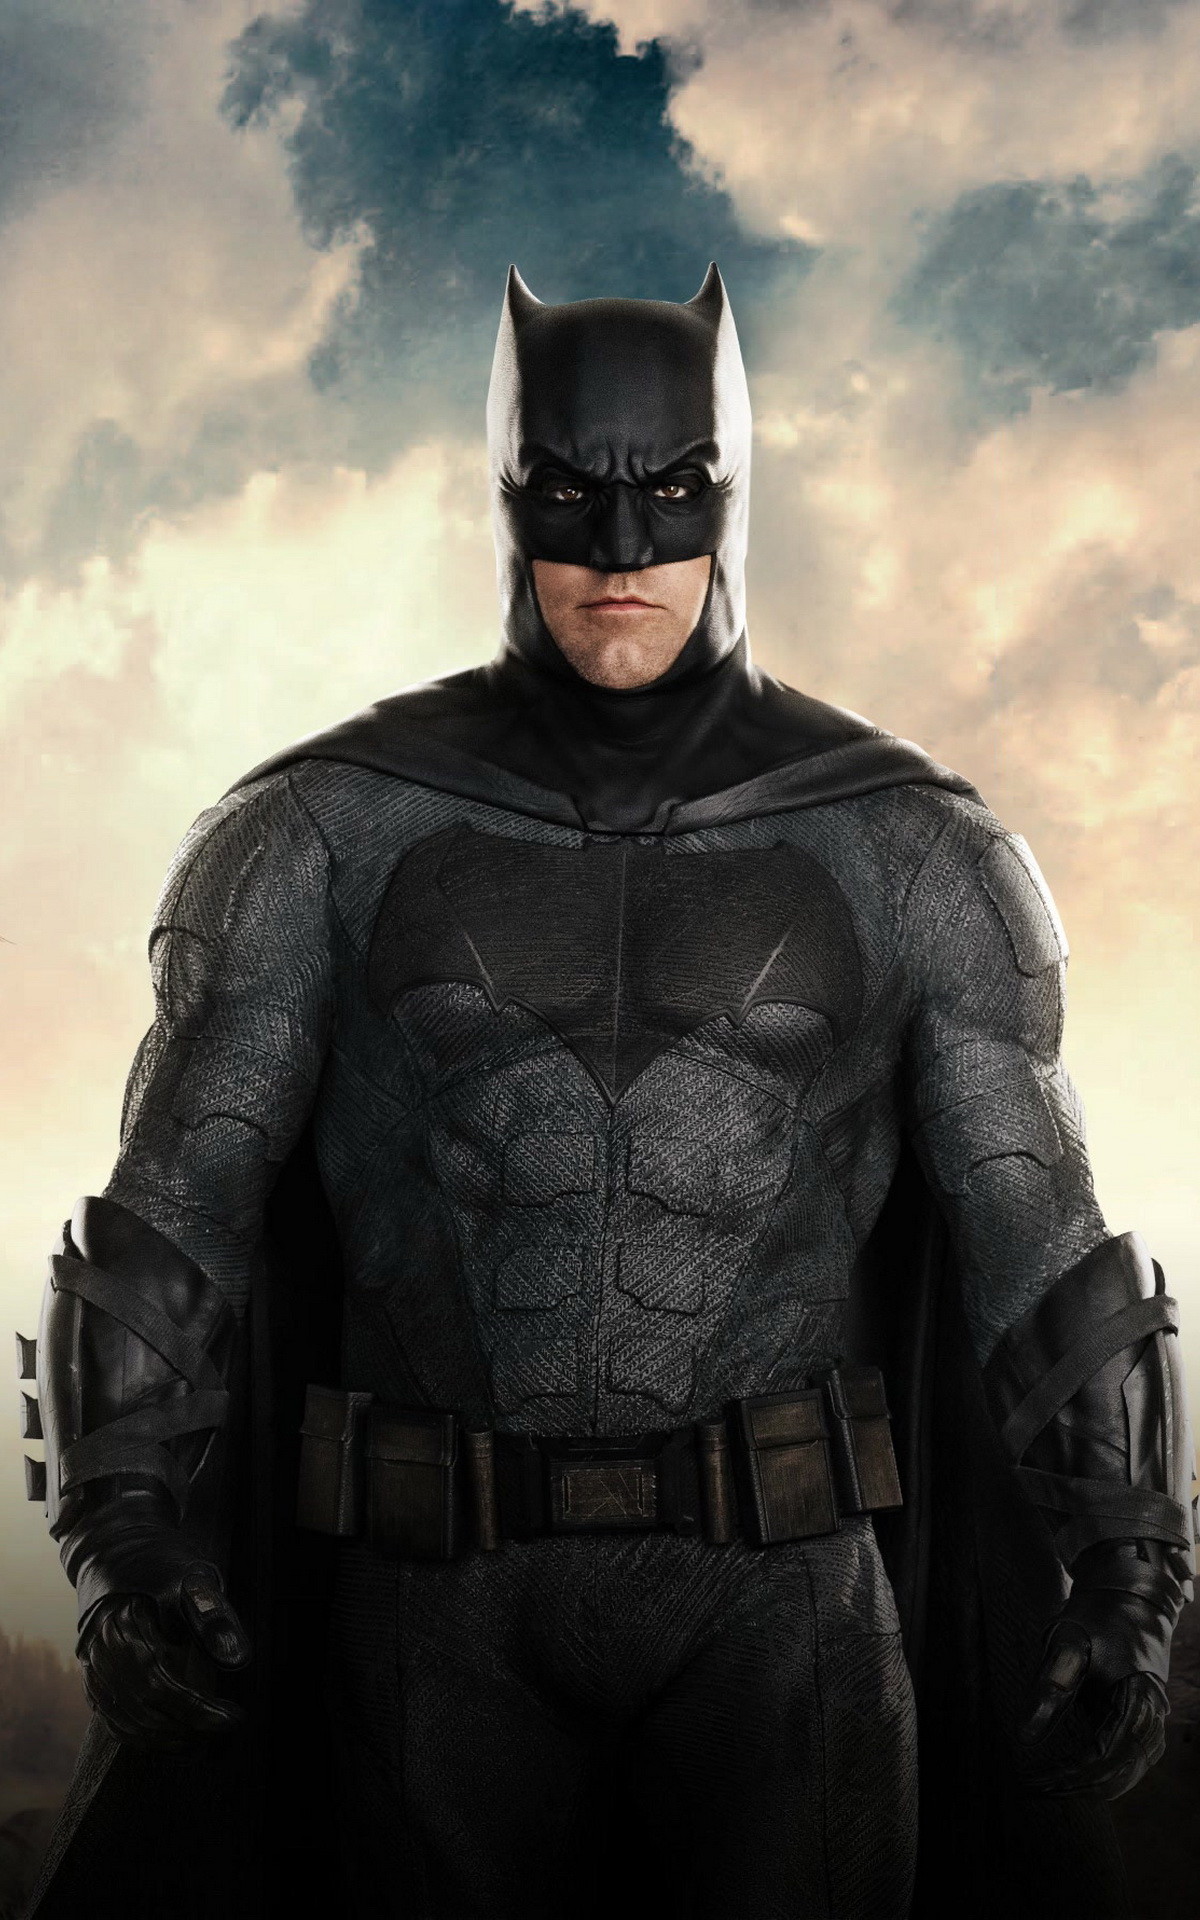 1200x1920 Ben Affleck as Bruce Wayne/Batman http://imgur.com/aKeoCuY the Batman is  still in limbo though .